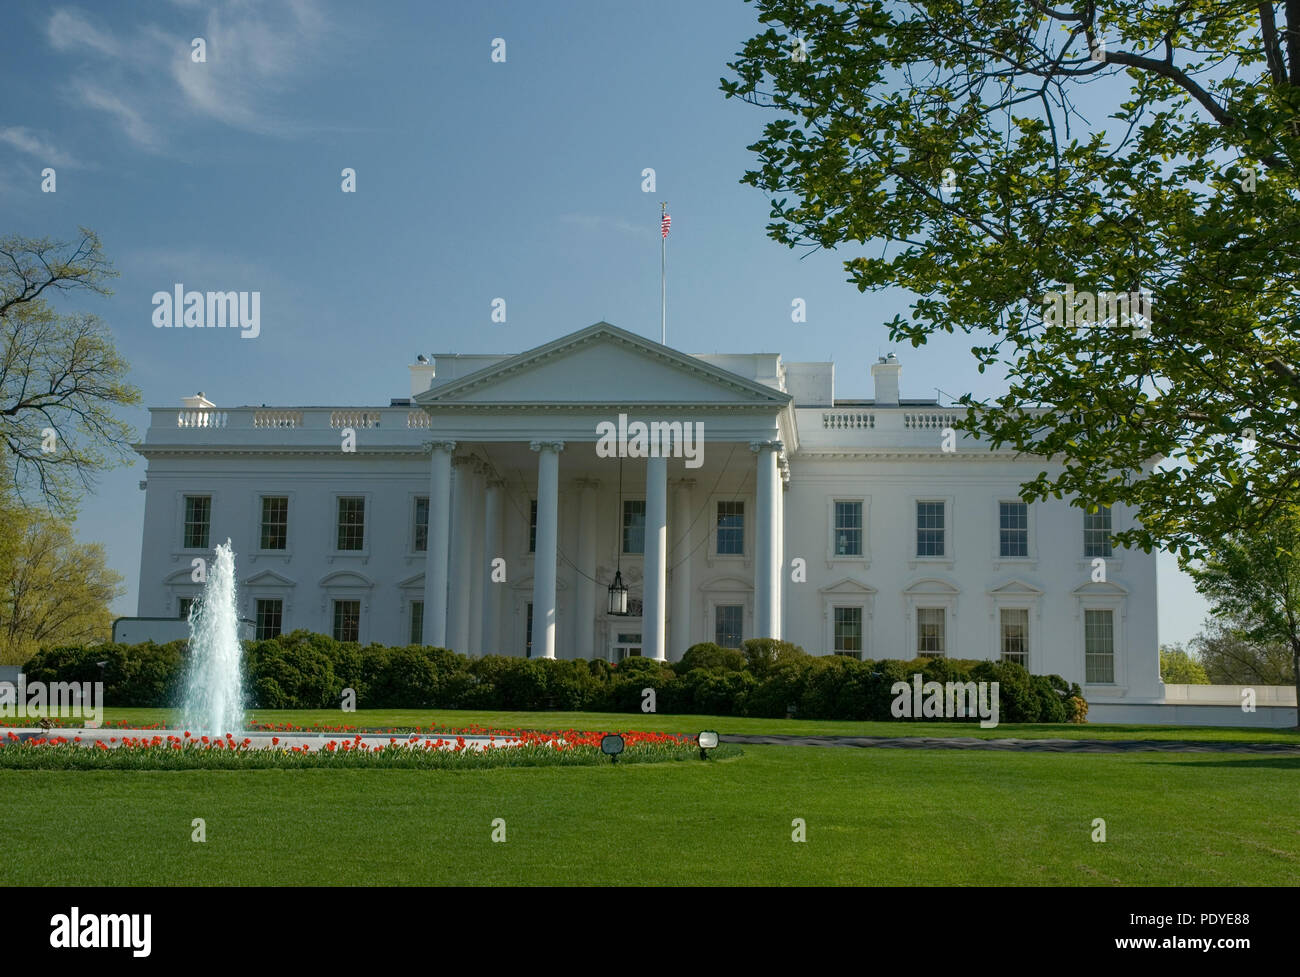 The White House, US Presidential Home and Office, Landmark, Washington D.C. Stock Photo